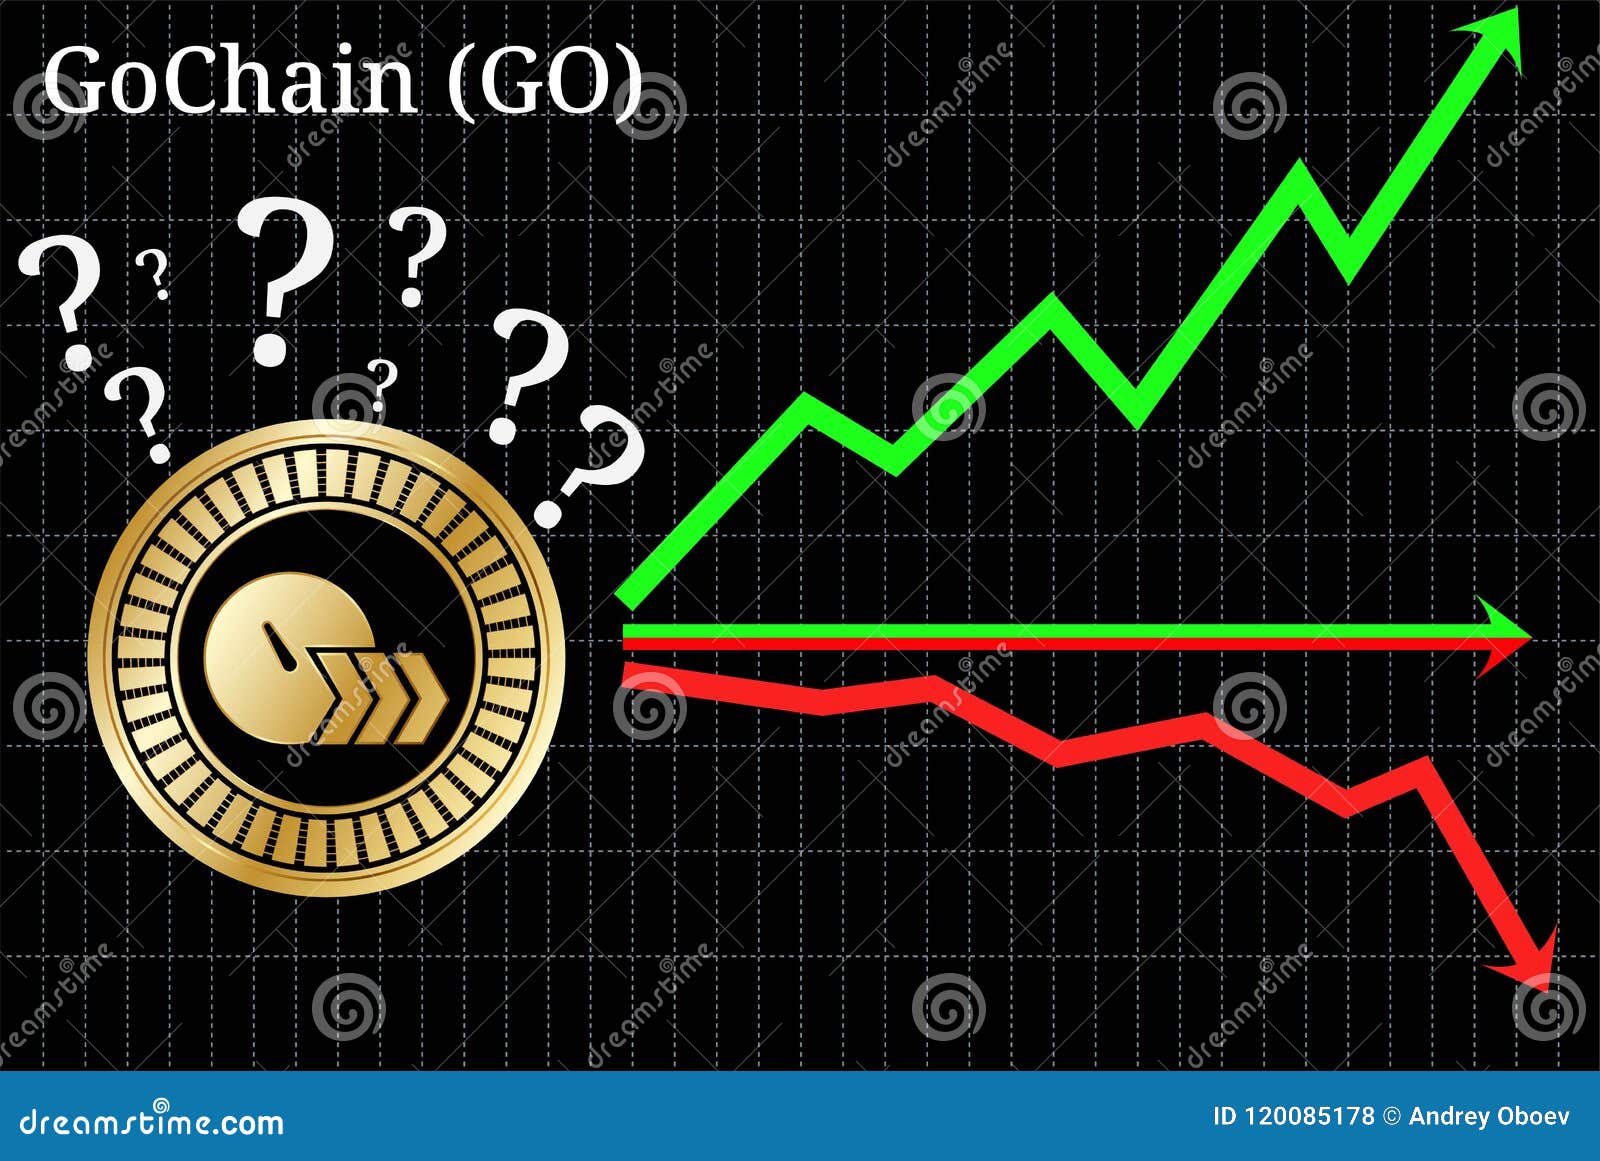 gochain crypto price prediction